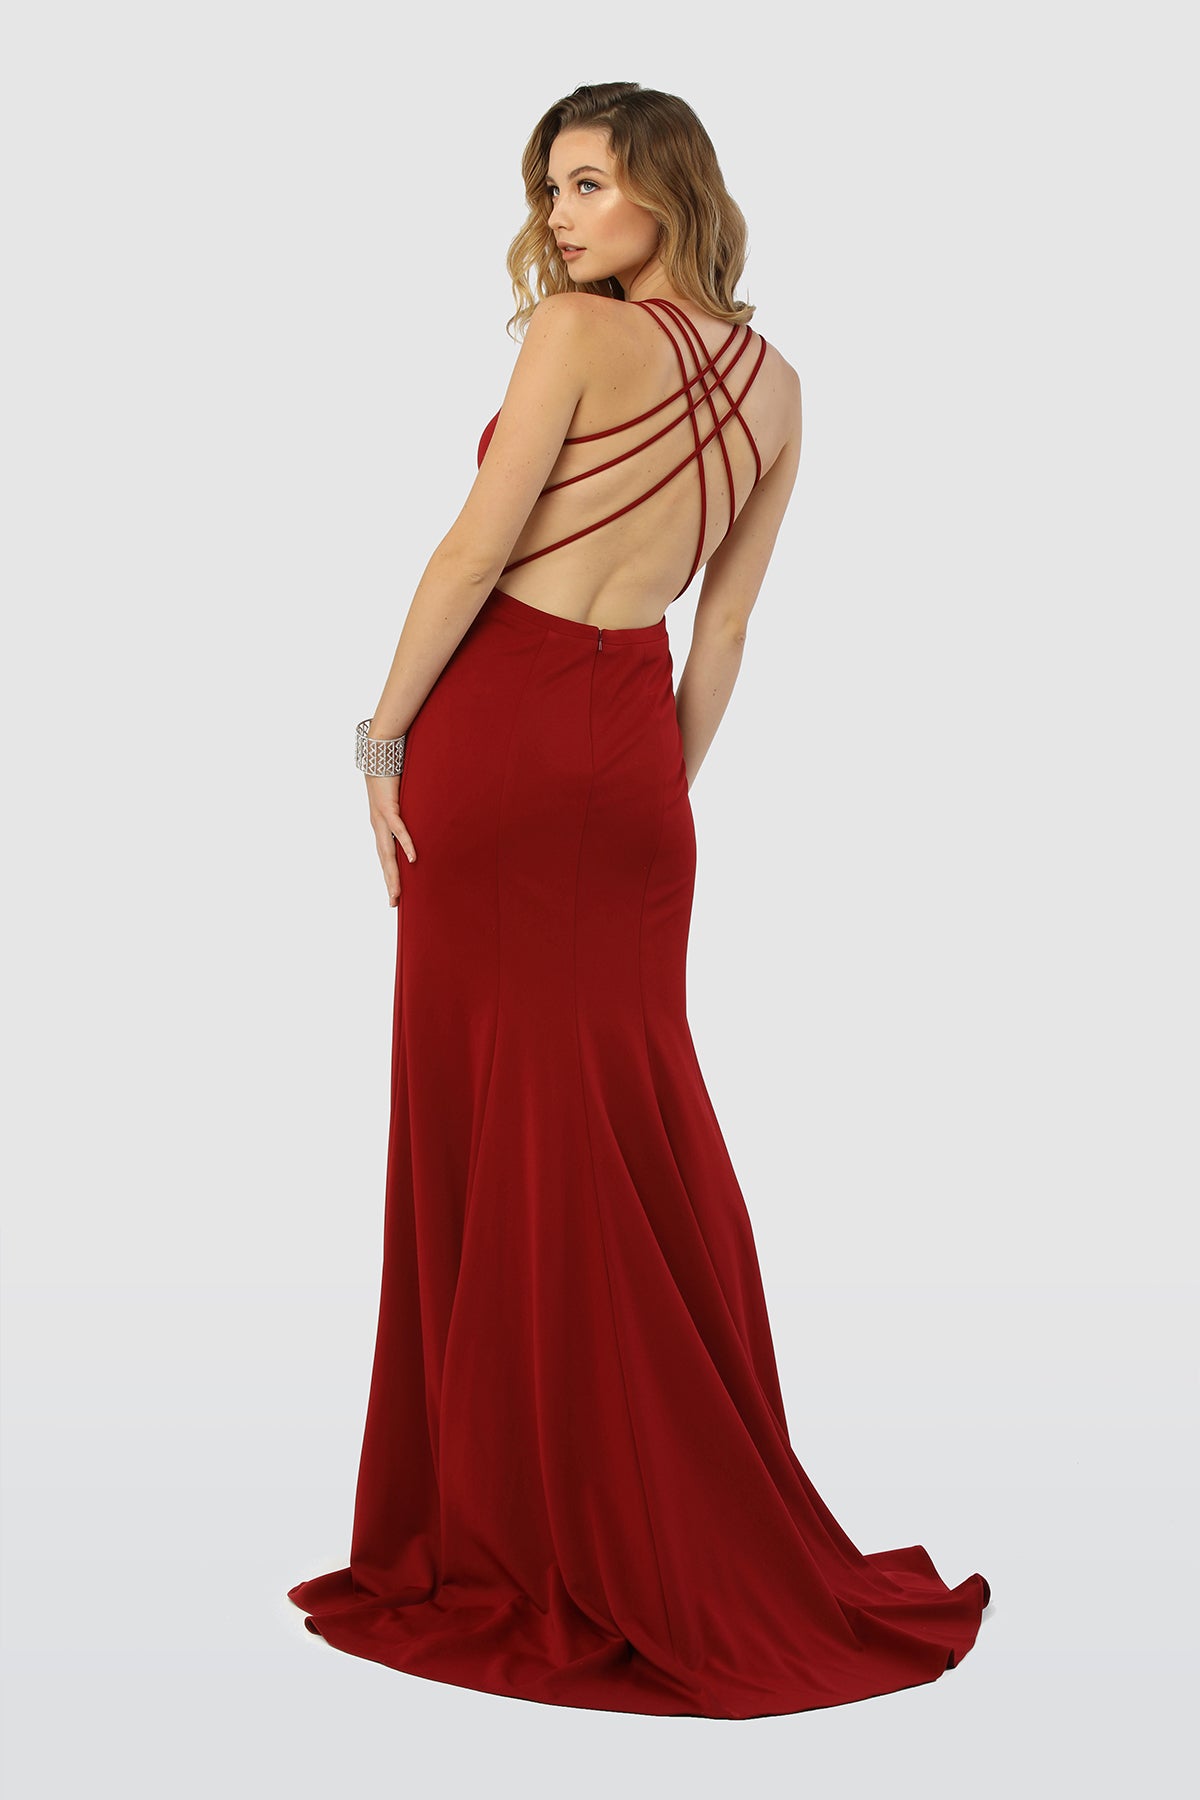 Neck Detailed Sleeveless Spaghetti Straps Side Slit Long Evening Dress NXM133-Evening Dress-smcfashion.com